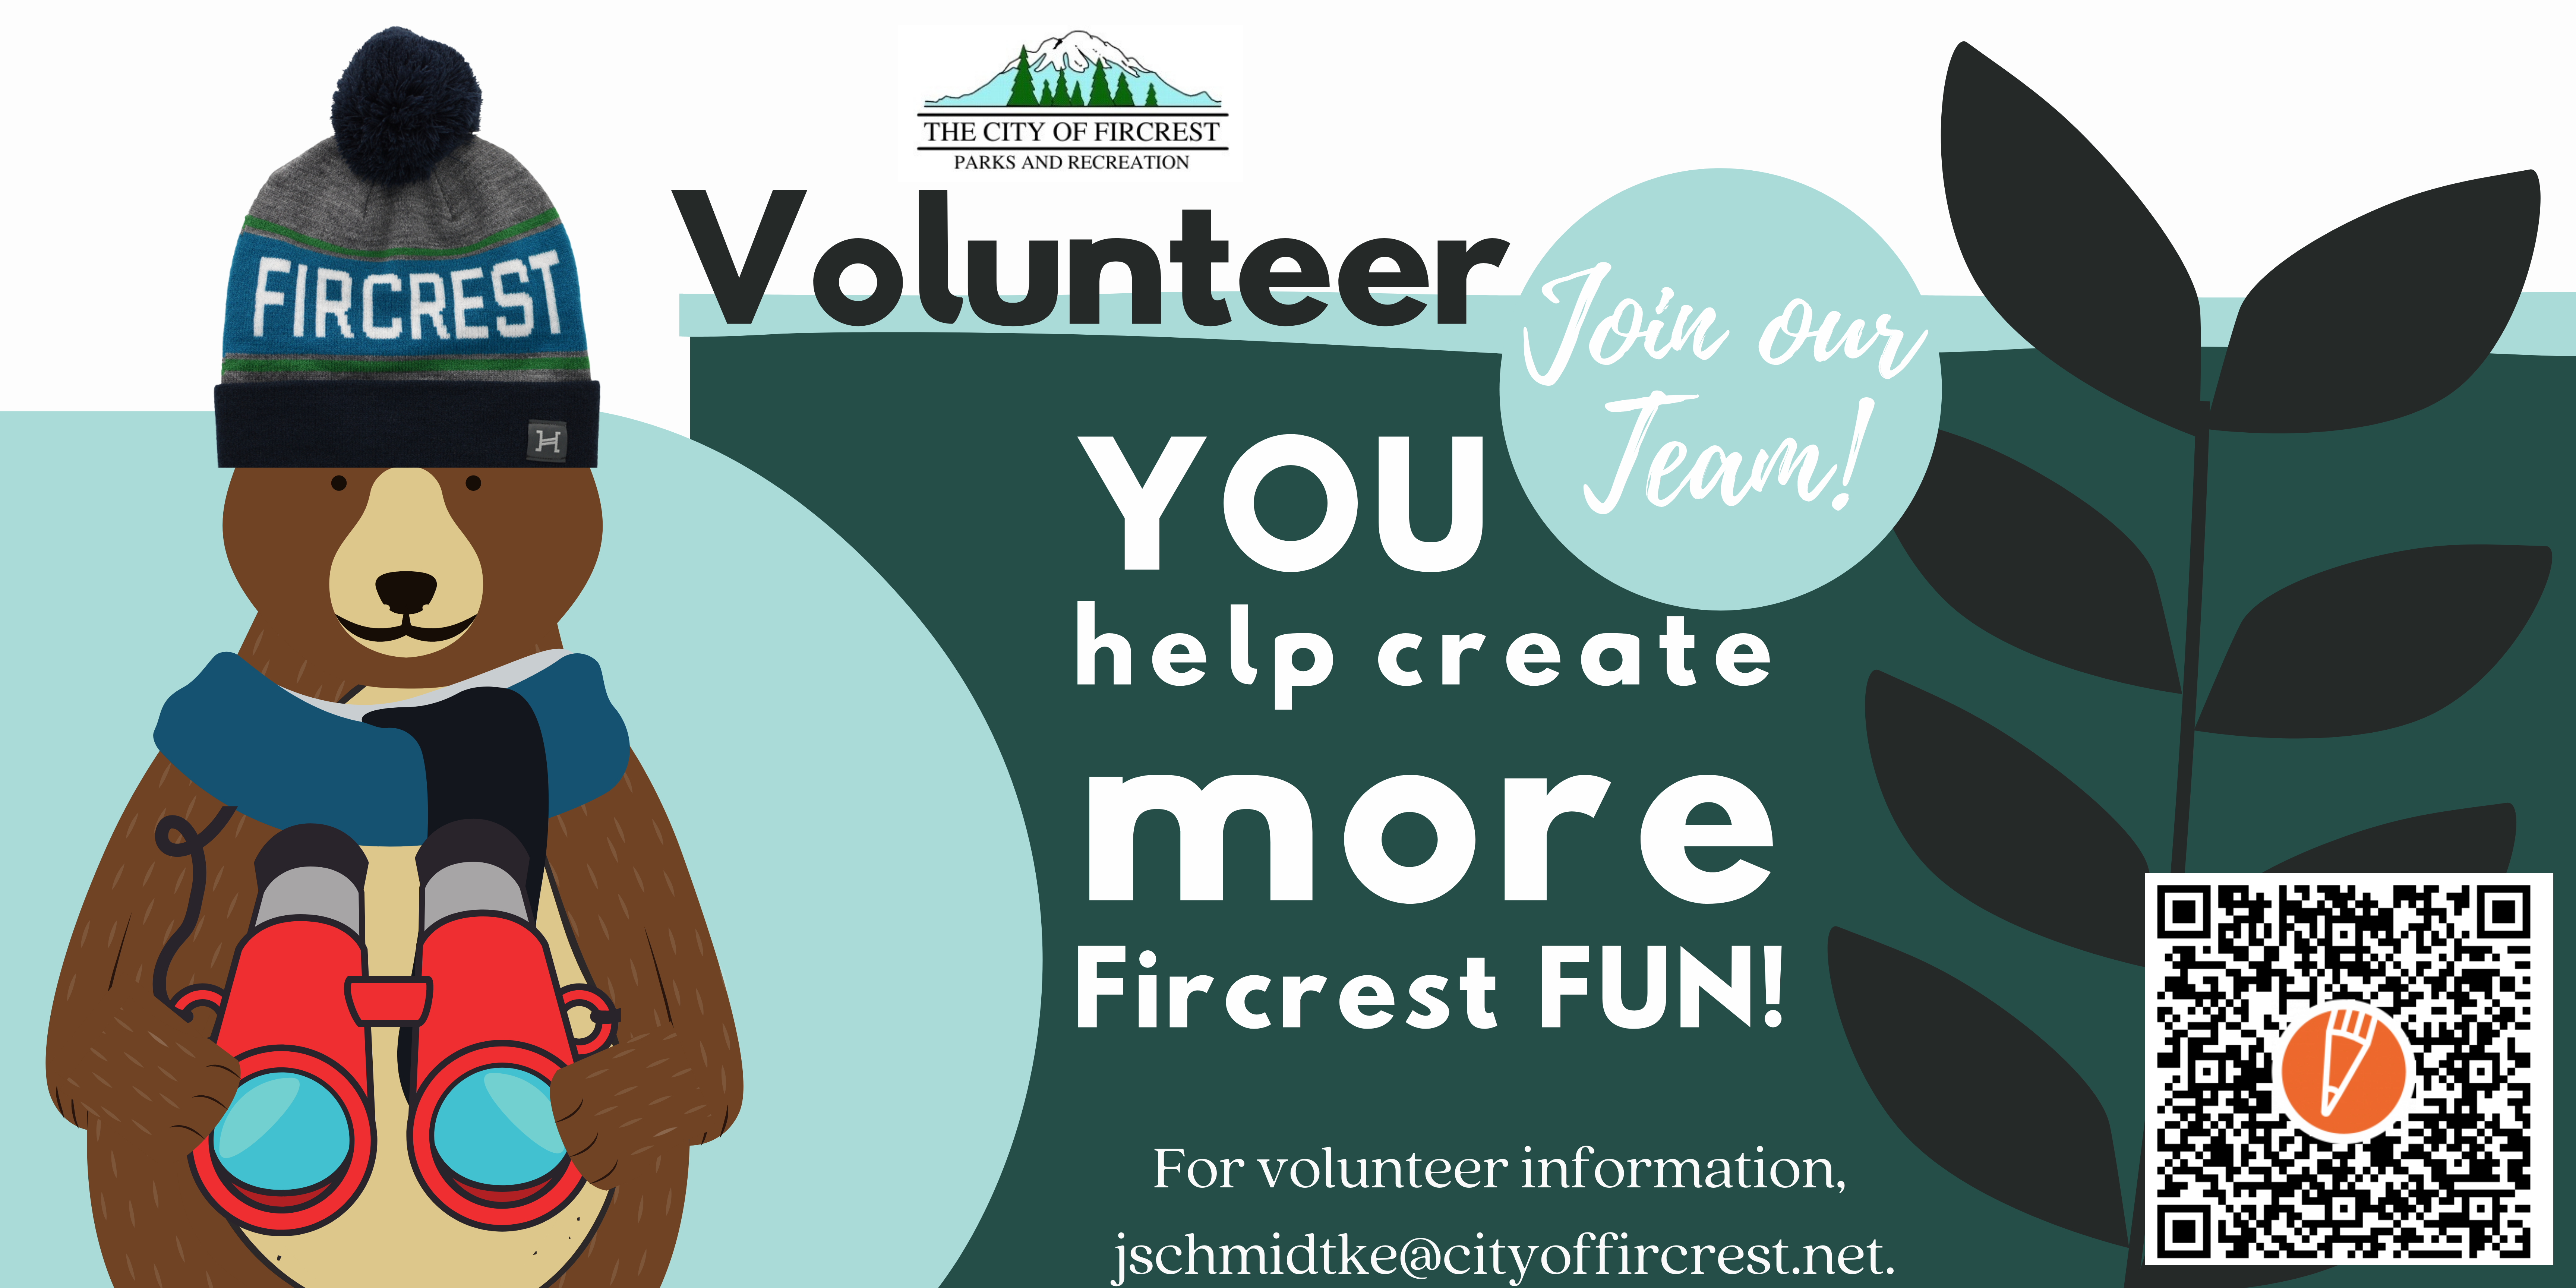 Volunteer - Join Our Team! You help create more Fircrest! For volunteer information, jschmidtke@cityoffircrest.net